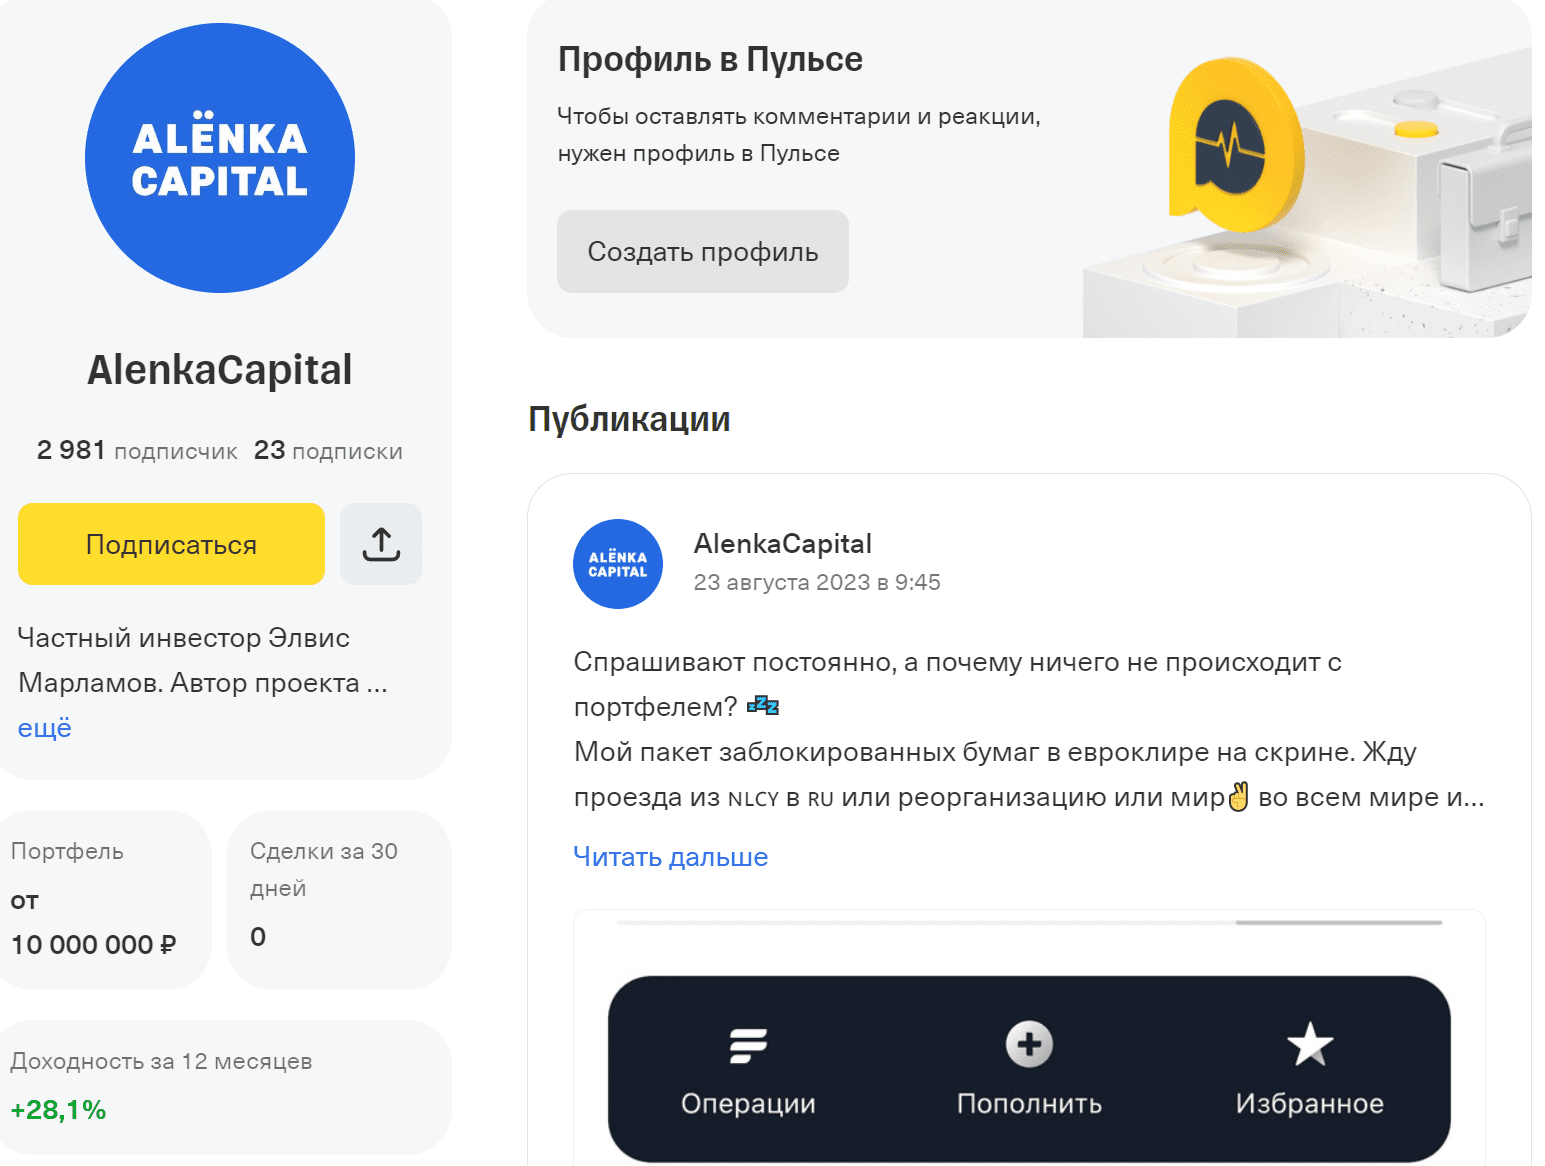 alenka capital отзывы